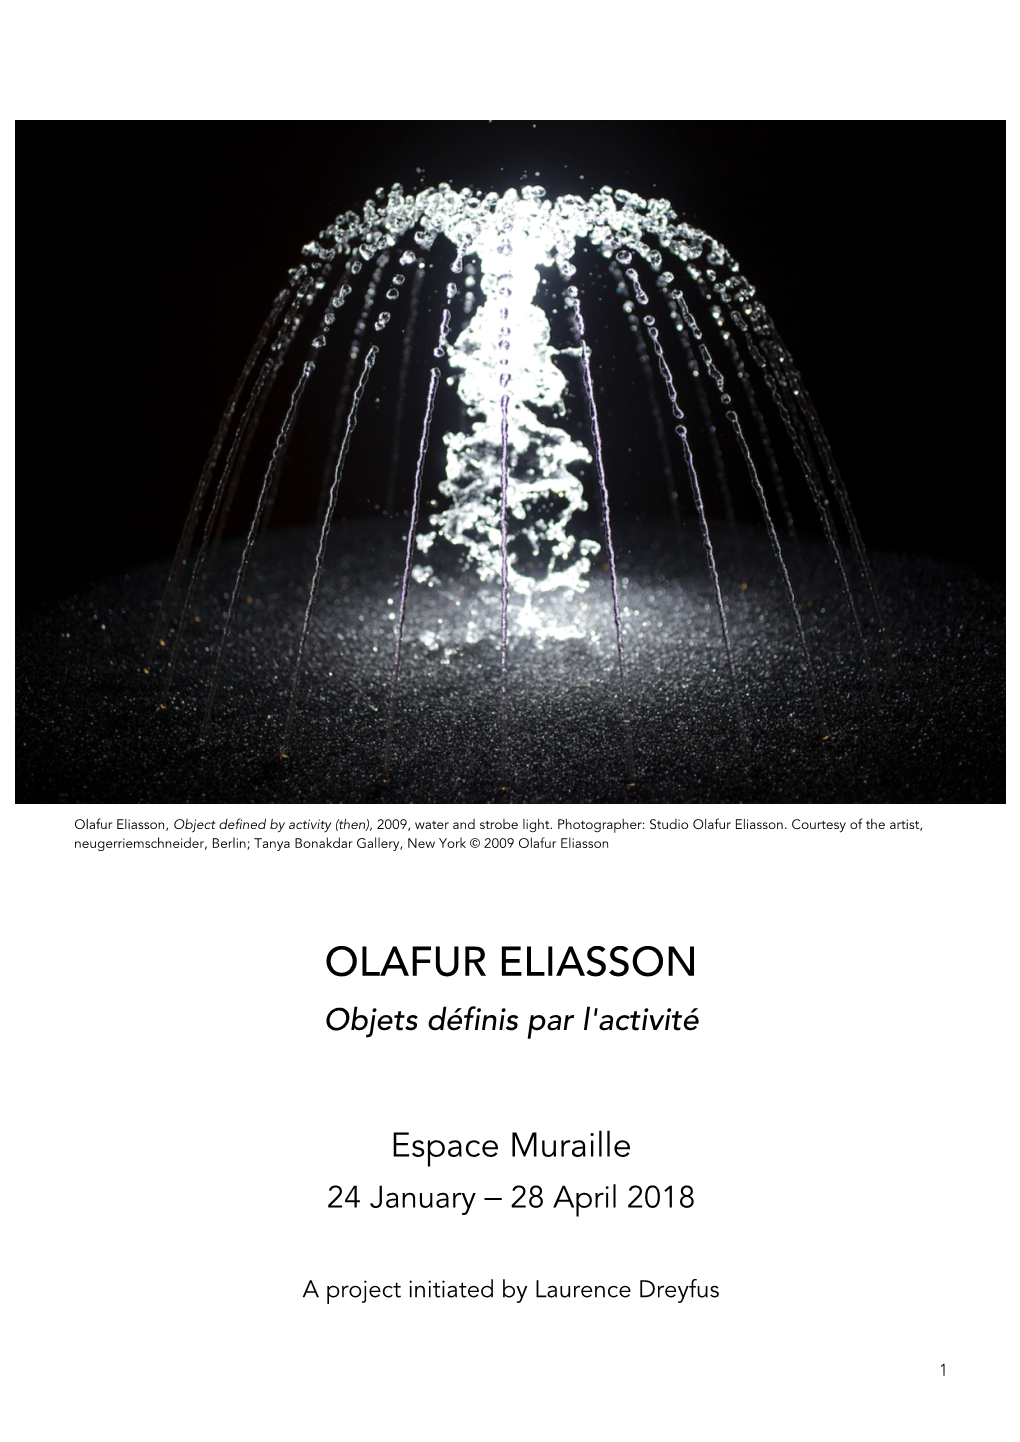 Olafur Eliasson -2018